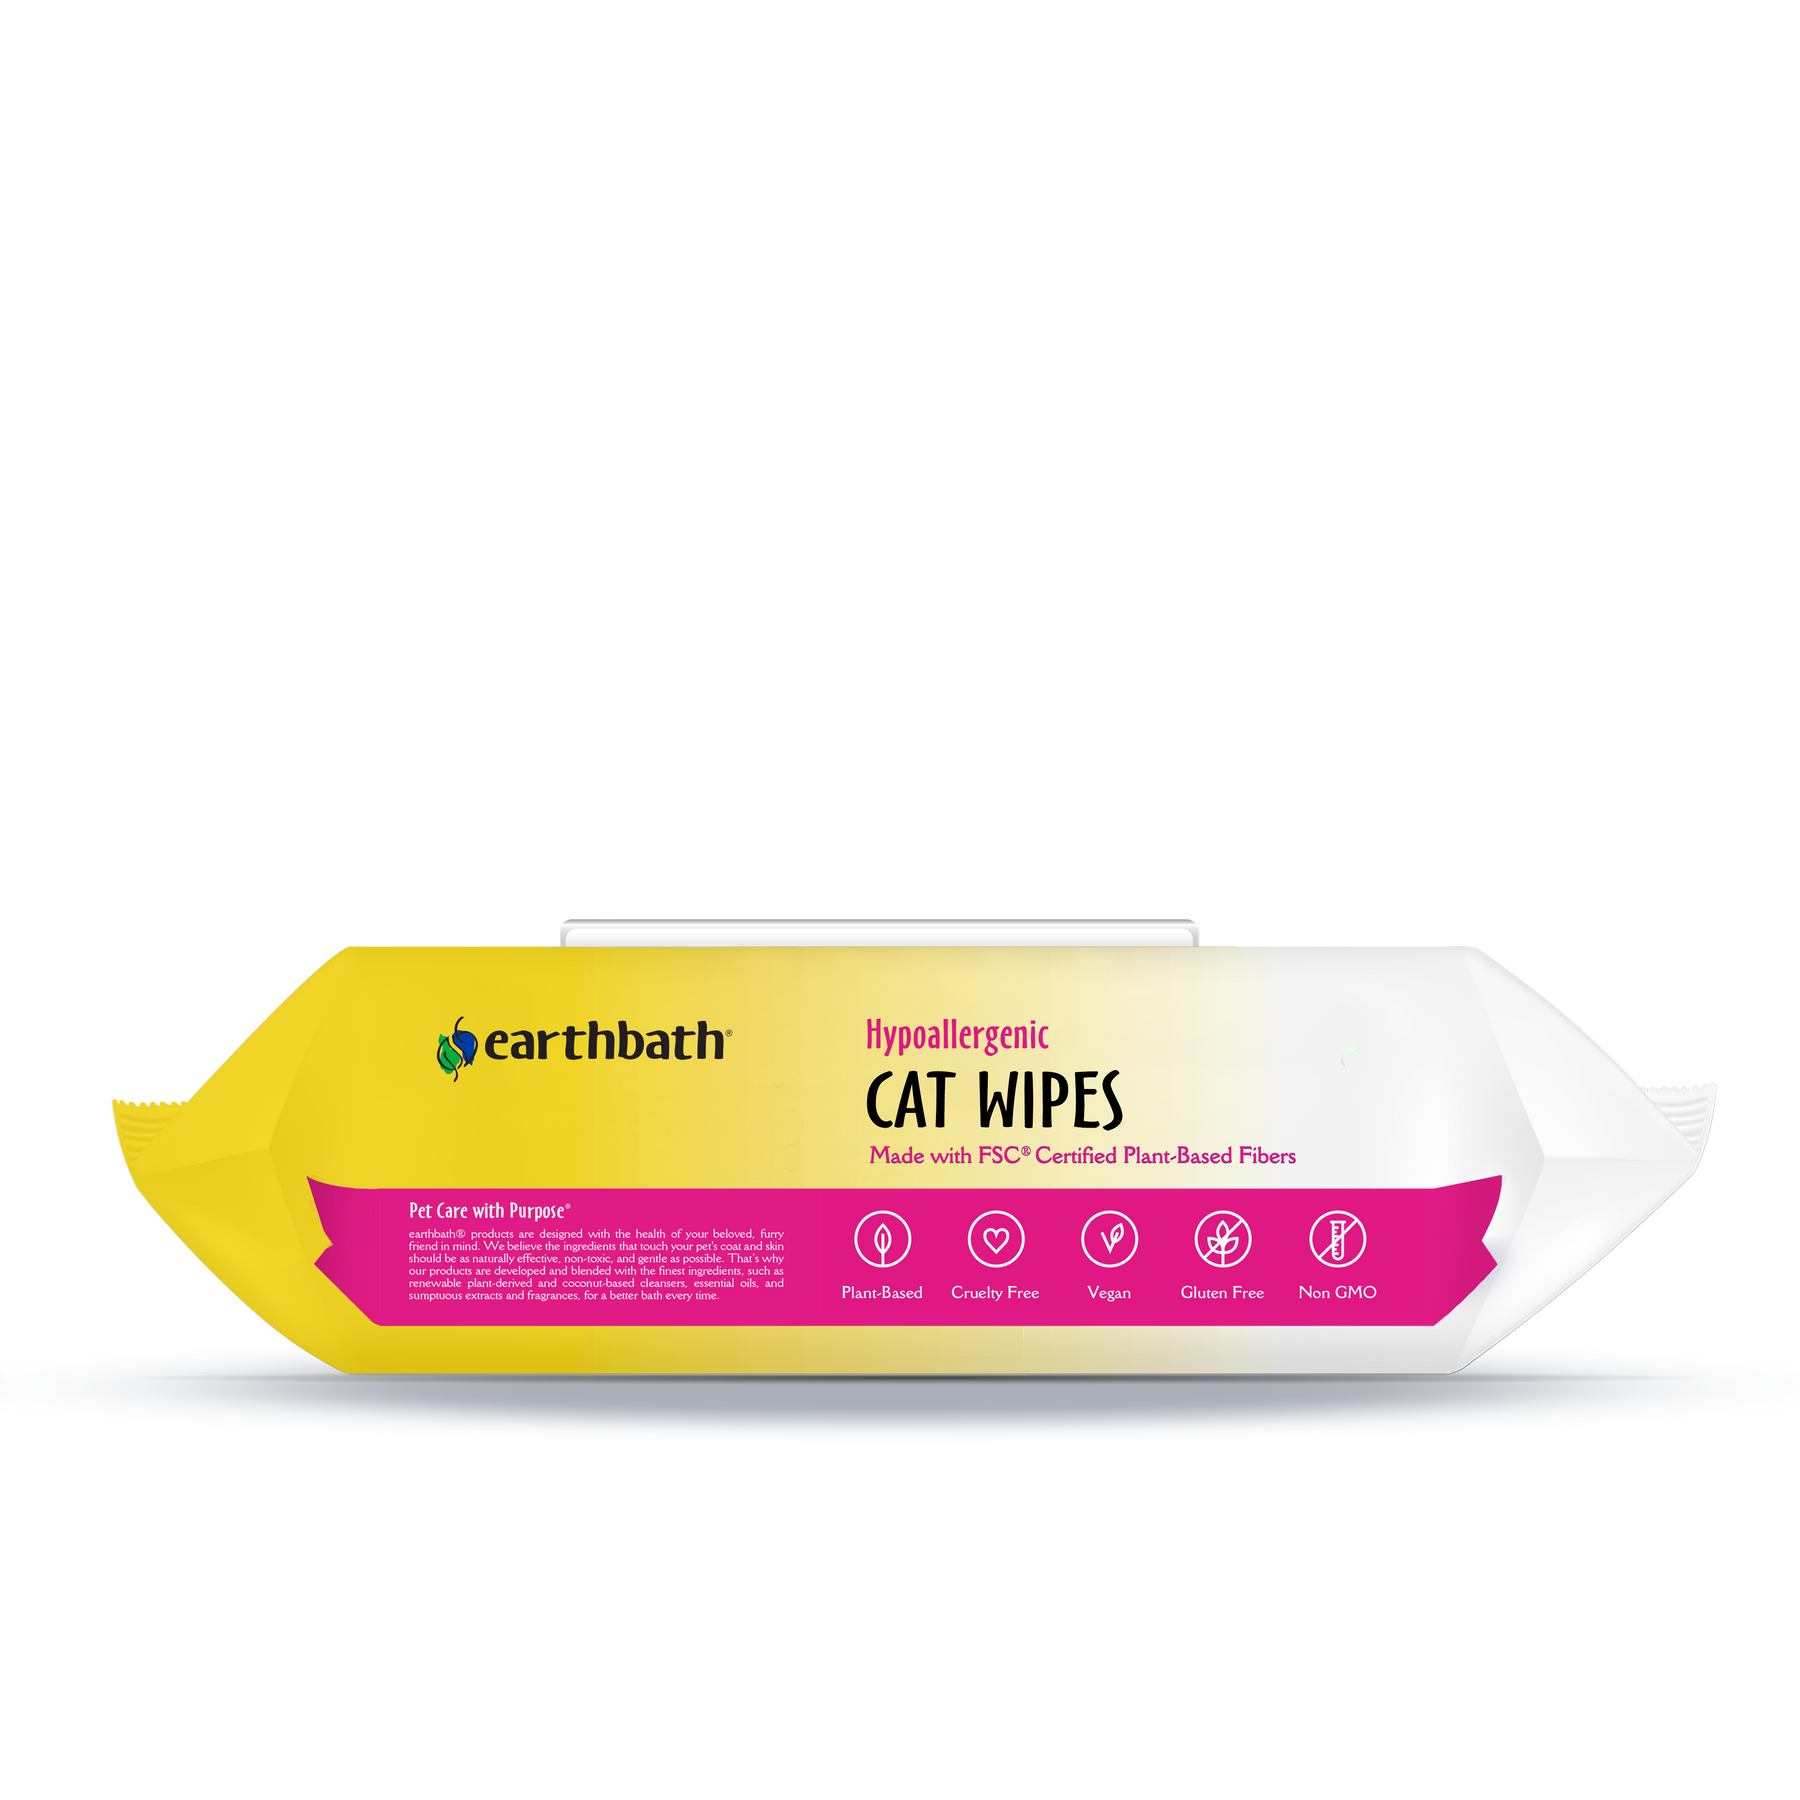 Hypoallergenic Cat Wipes